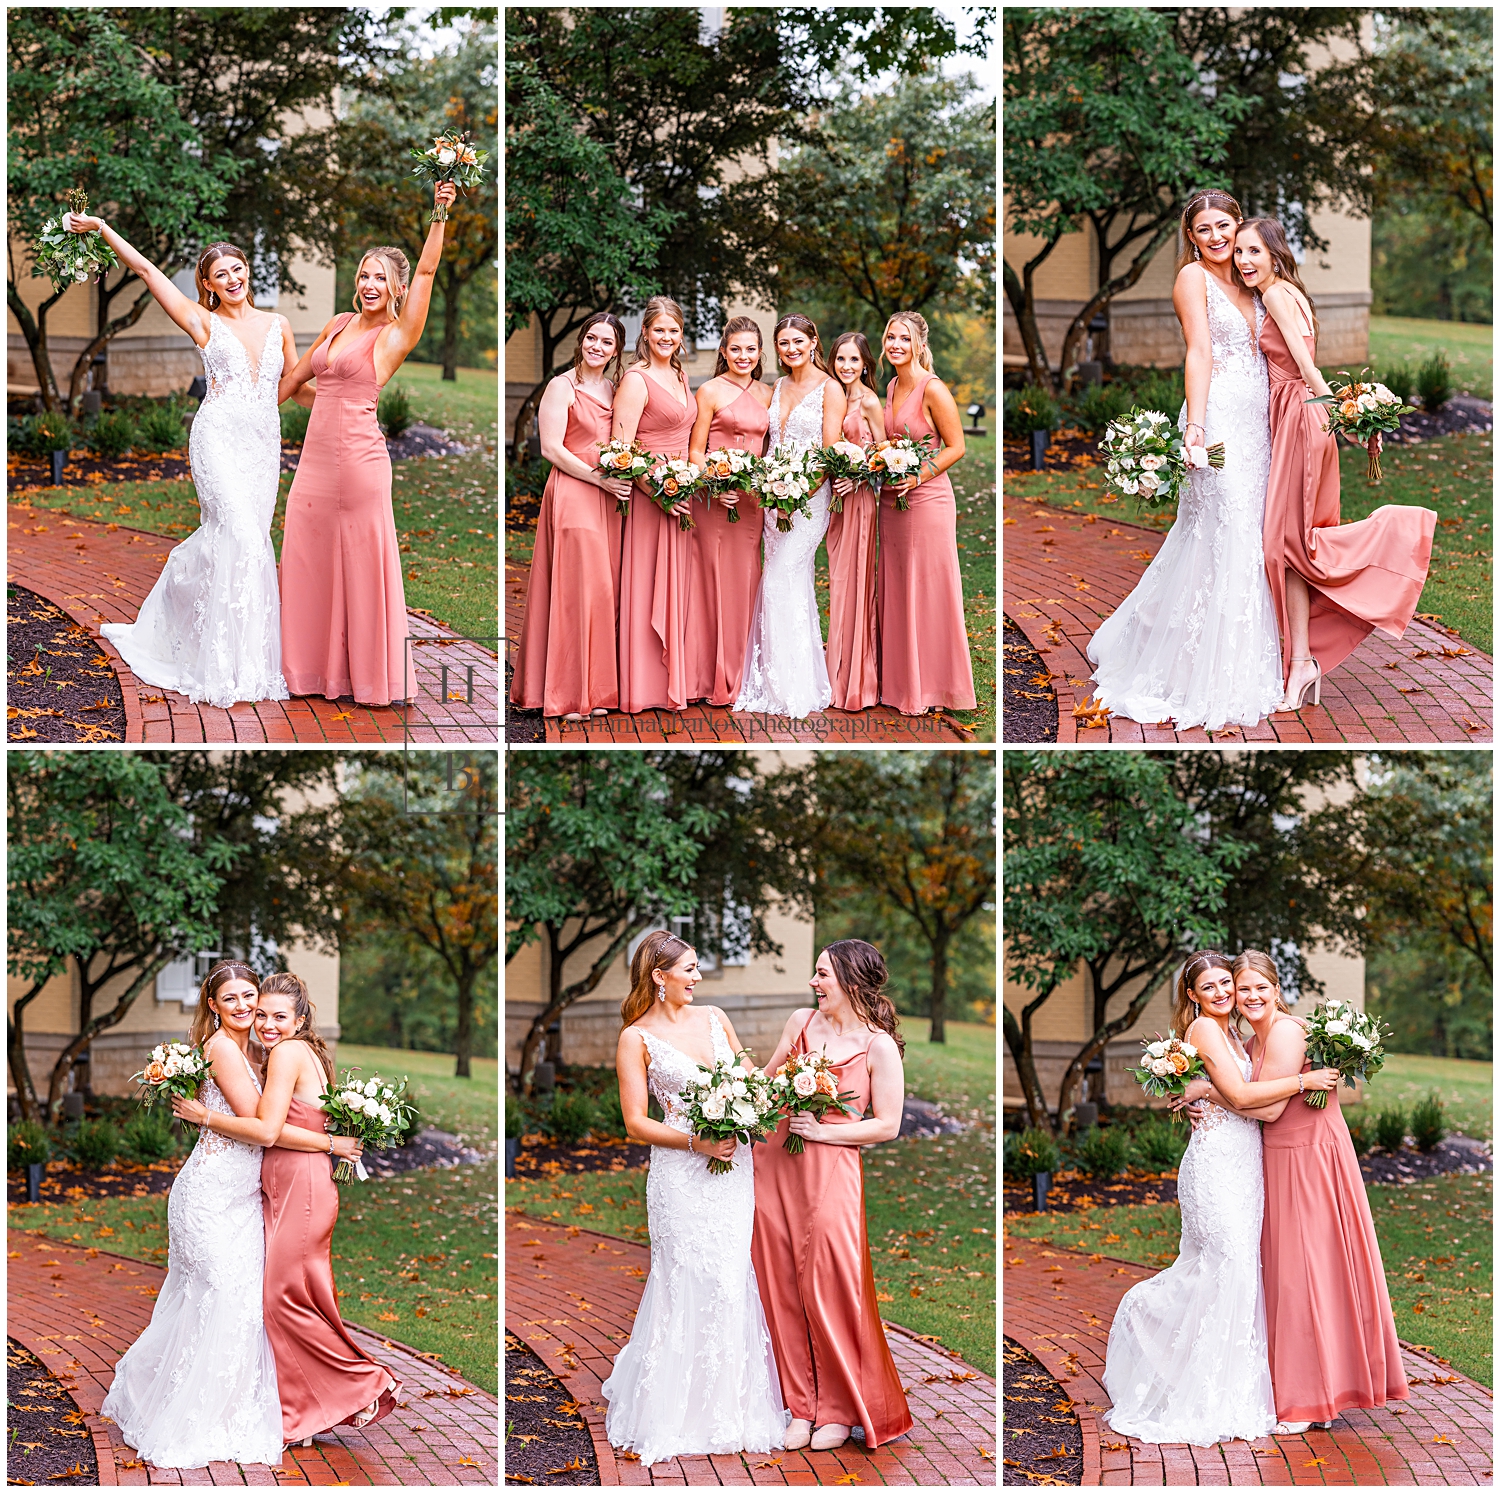 Bridesmaids in cedar rose dresses pose individually with bride.